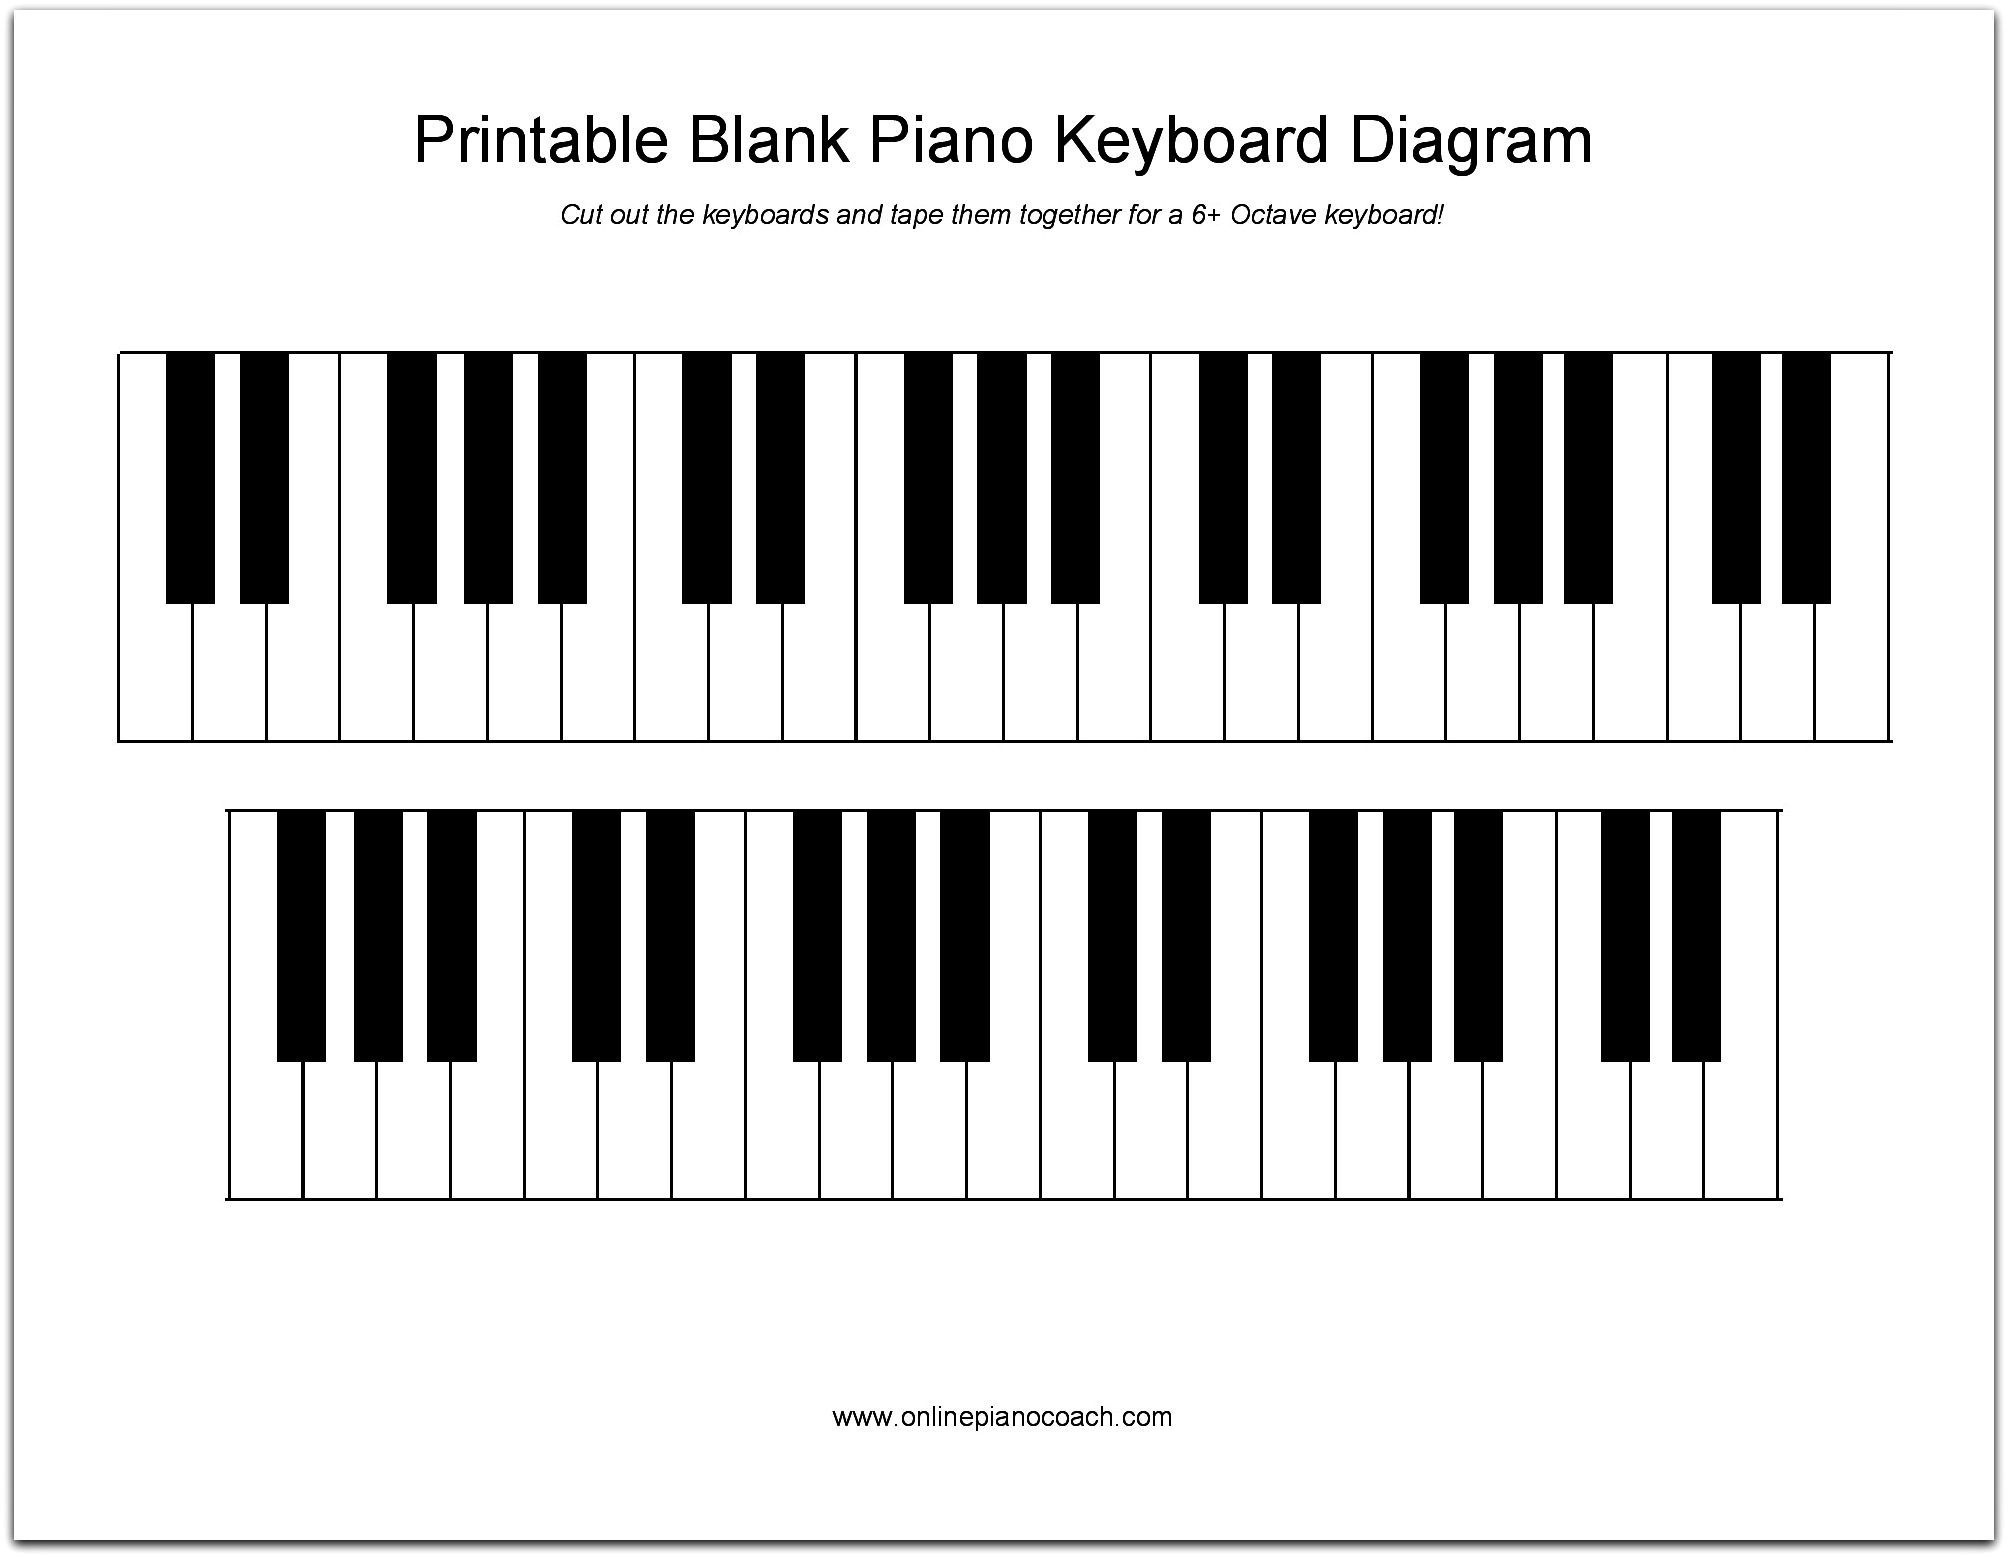 Printable Piano Keyboard Diagram In 2019 | Music | Piano, Easy Piano - Free Printable Keyboard Stickers